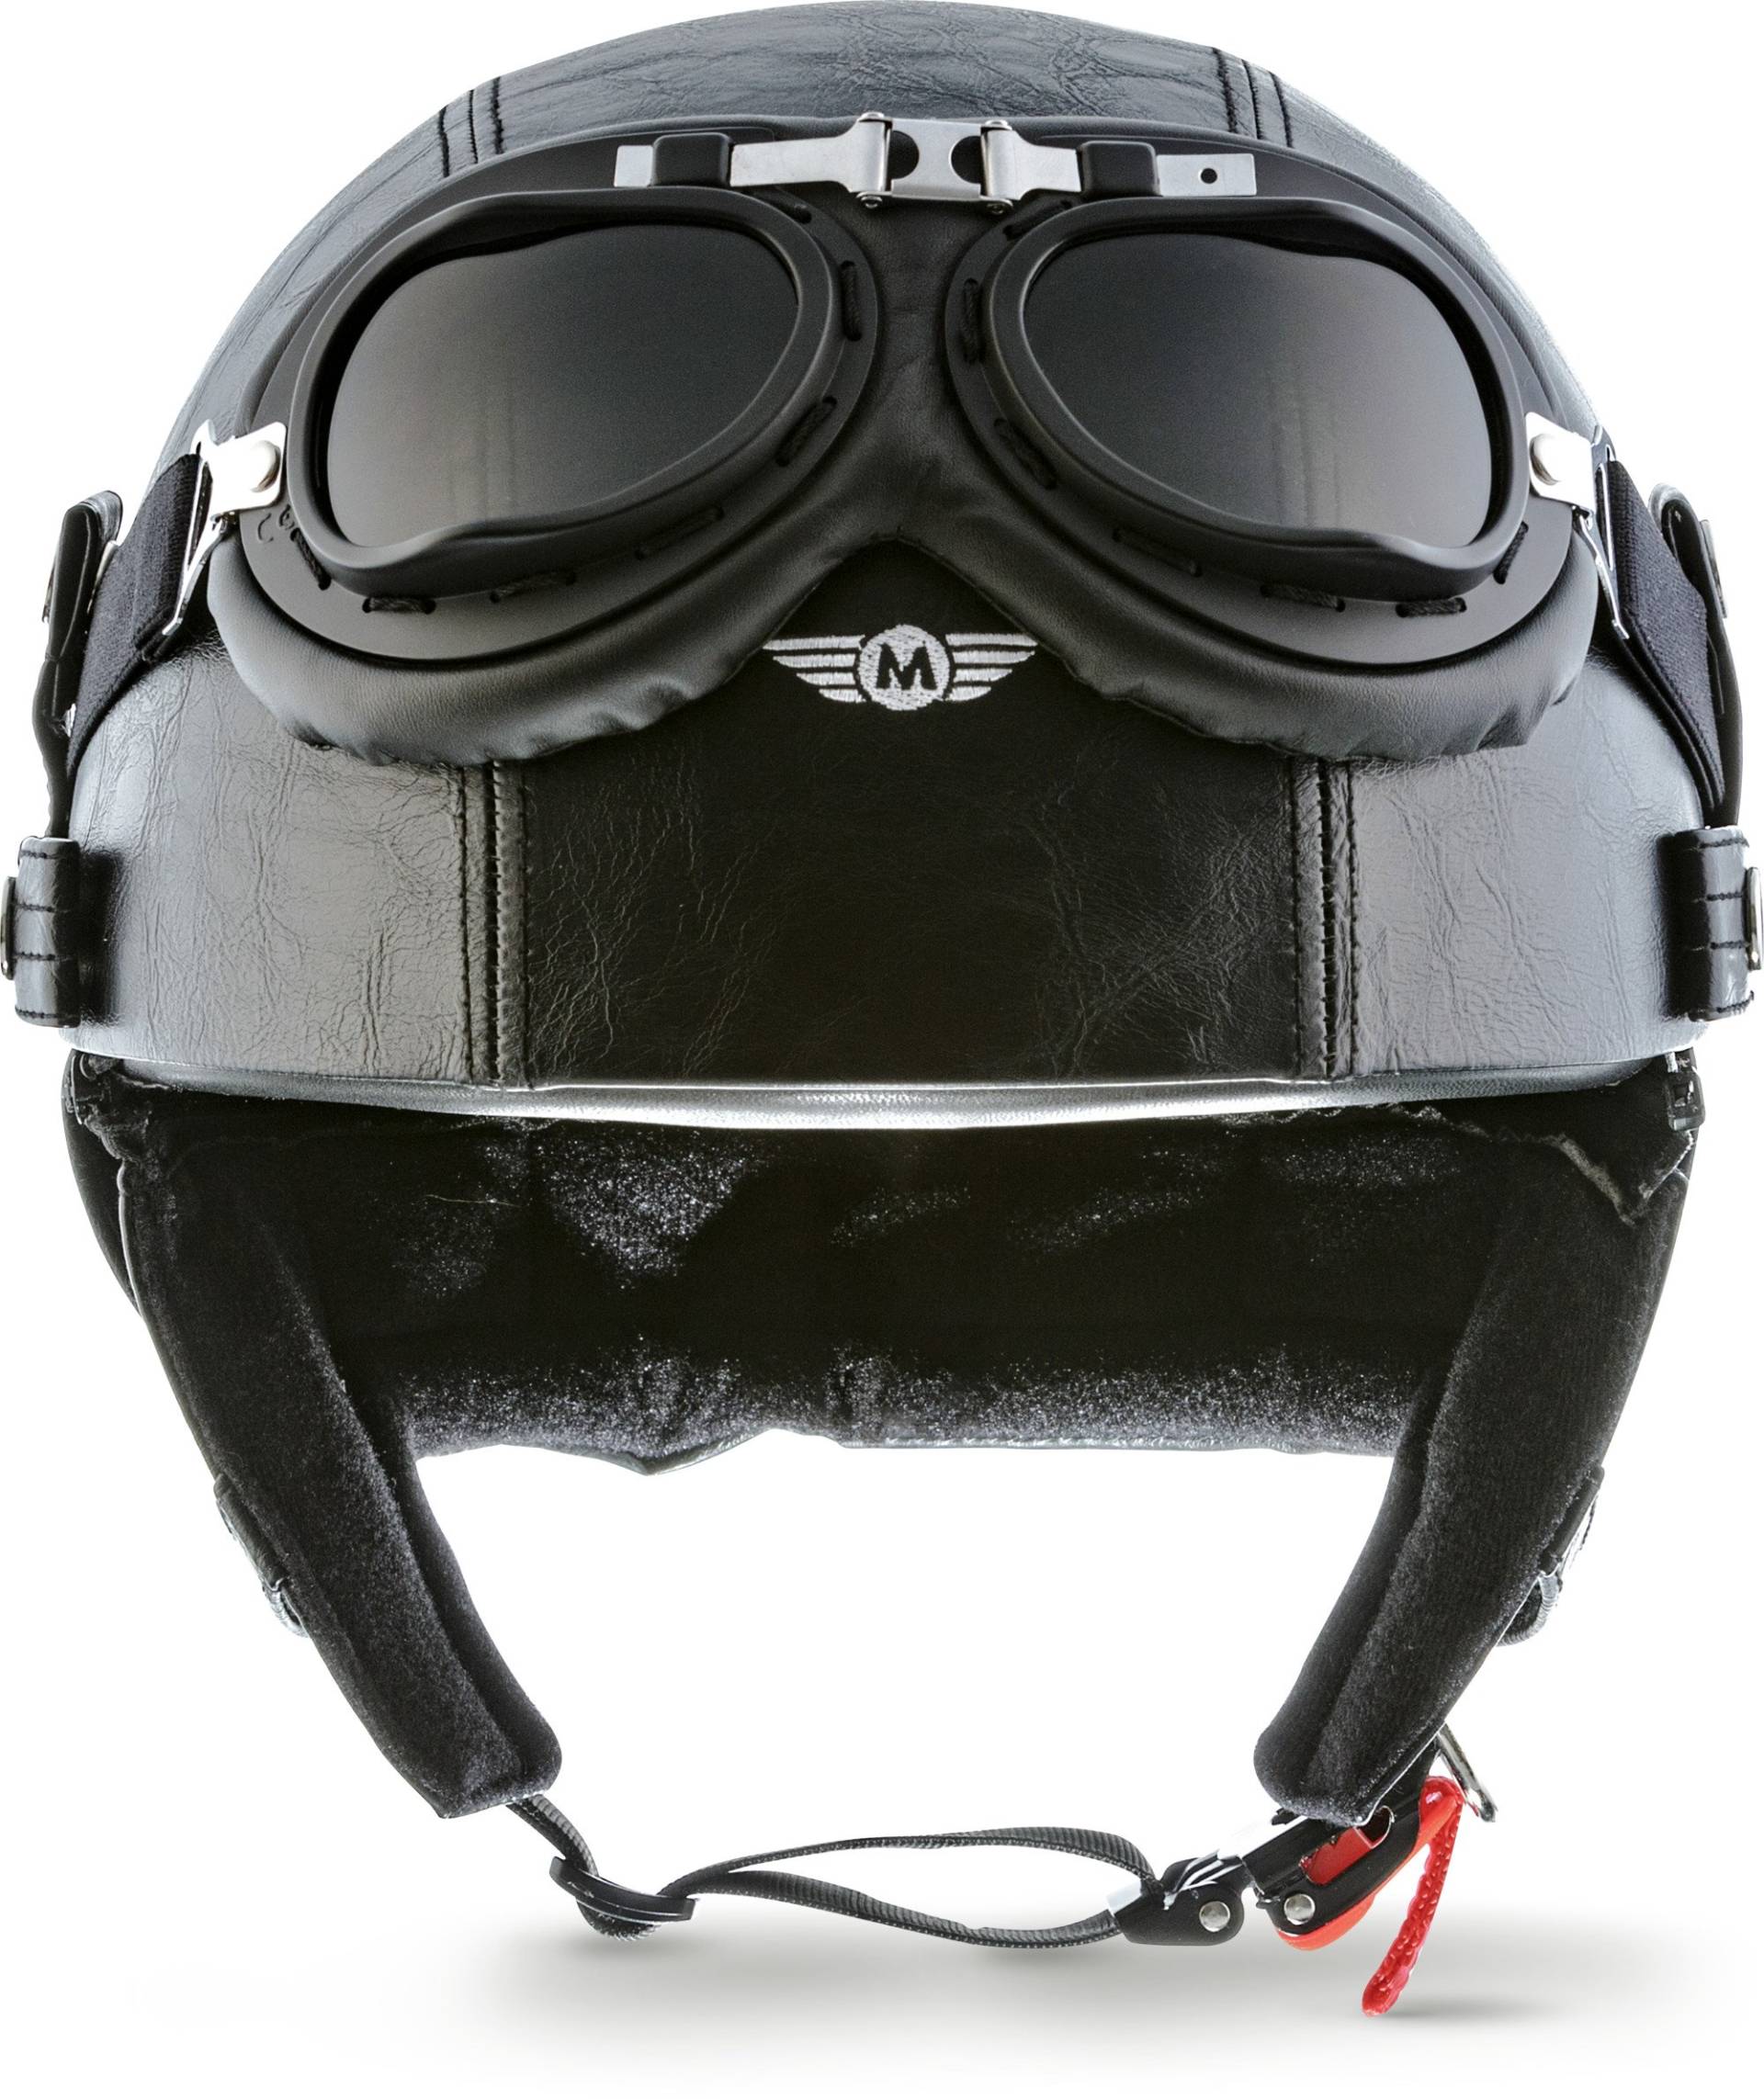 Moto Helmets® D22-Set „Leather Black“ · Brain-Cap · Halbschale Jet-Helm Motorrad-Helm Roller-Helm Scooter-Helm Bobber Mofa-Helm Chopper Retro Cruiser Vintage Pilot Biker Helmet Brille · M (57-58cm) von Moto Helmets